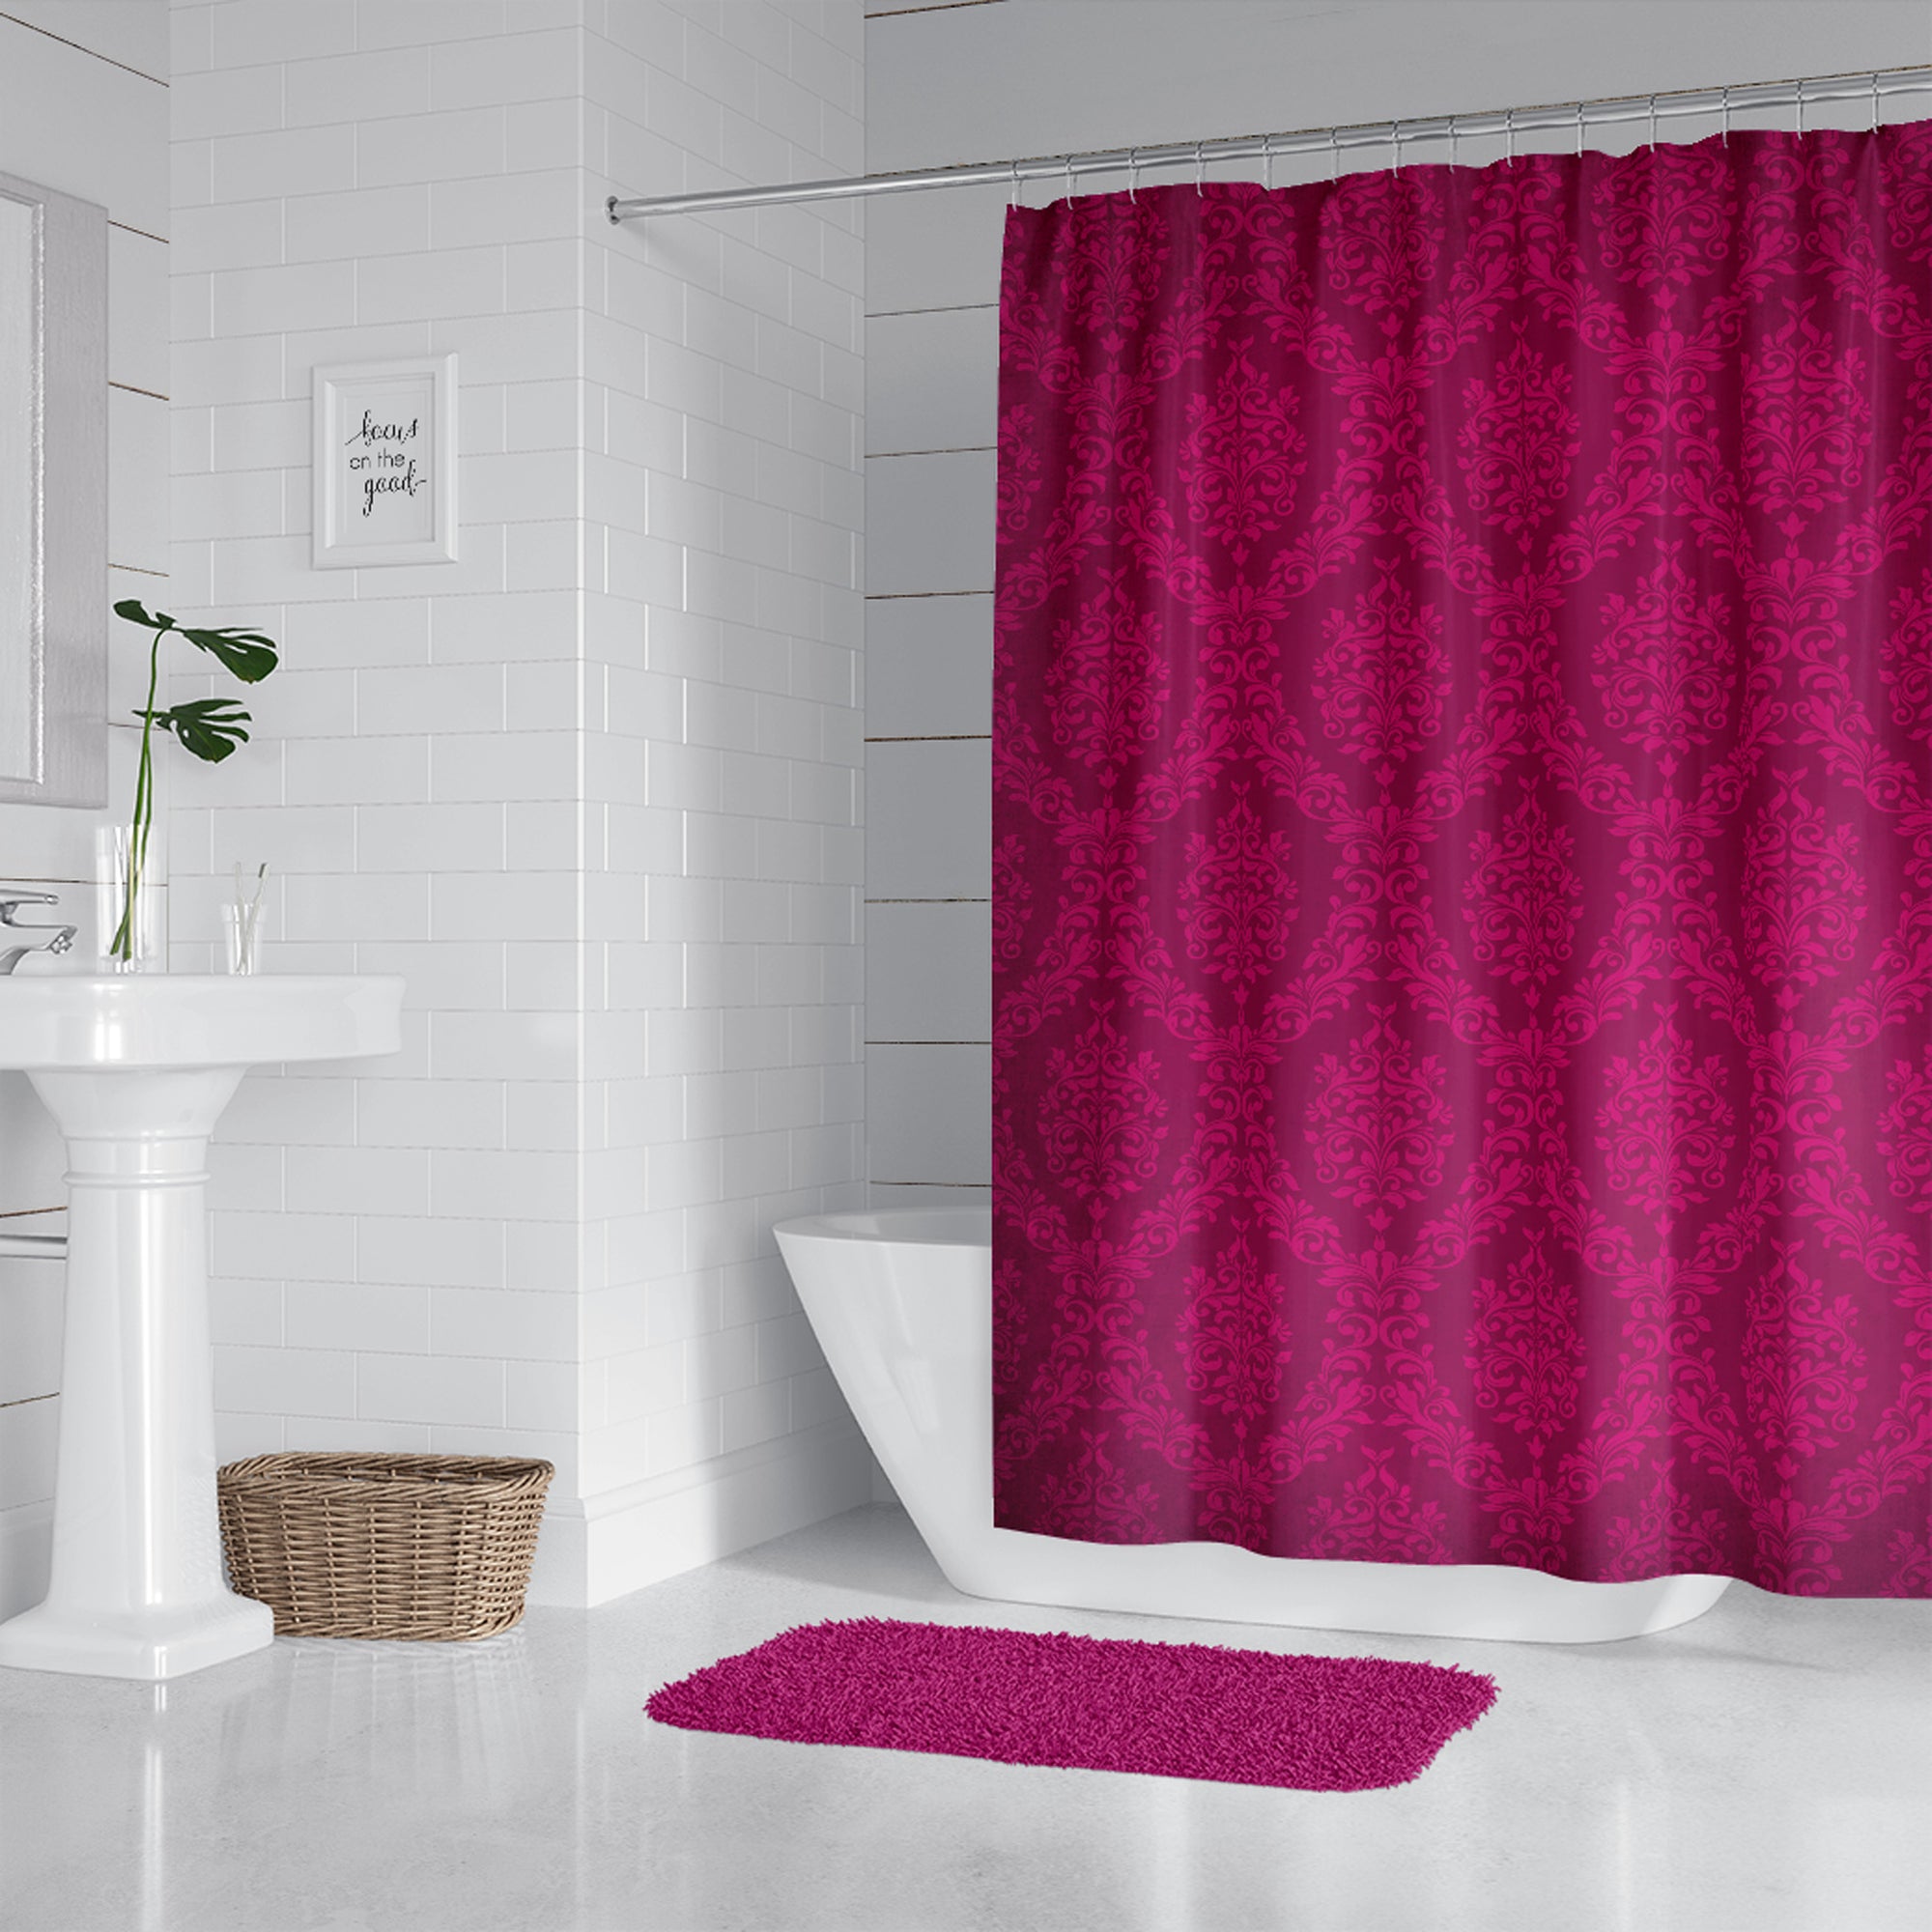 Hot Hot Pink Damask Grunge Shower Curtain